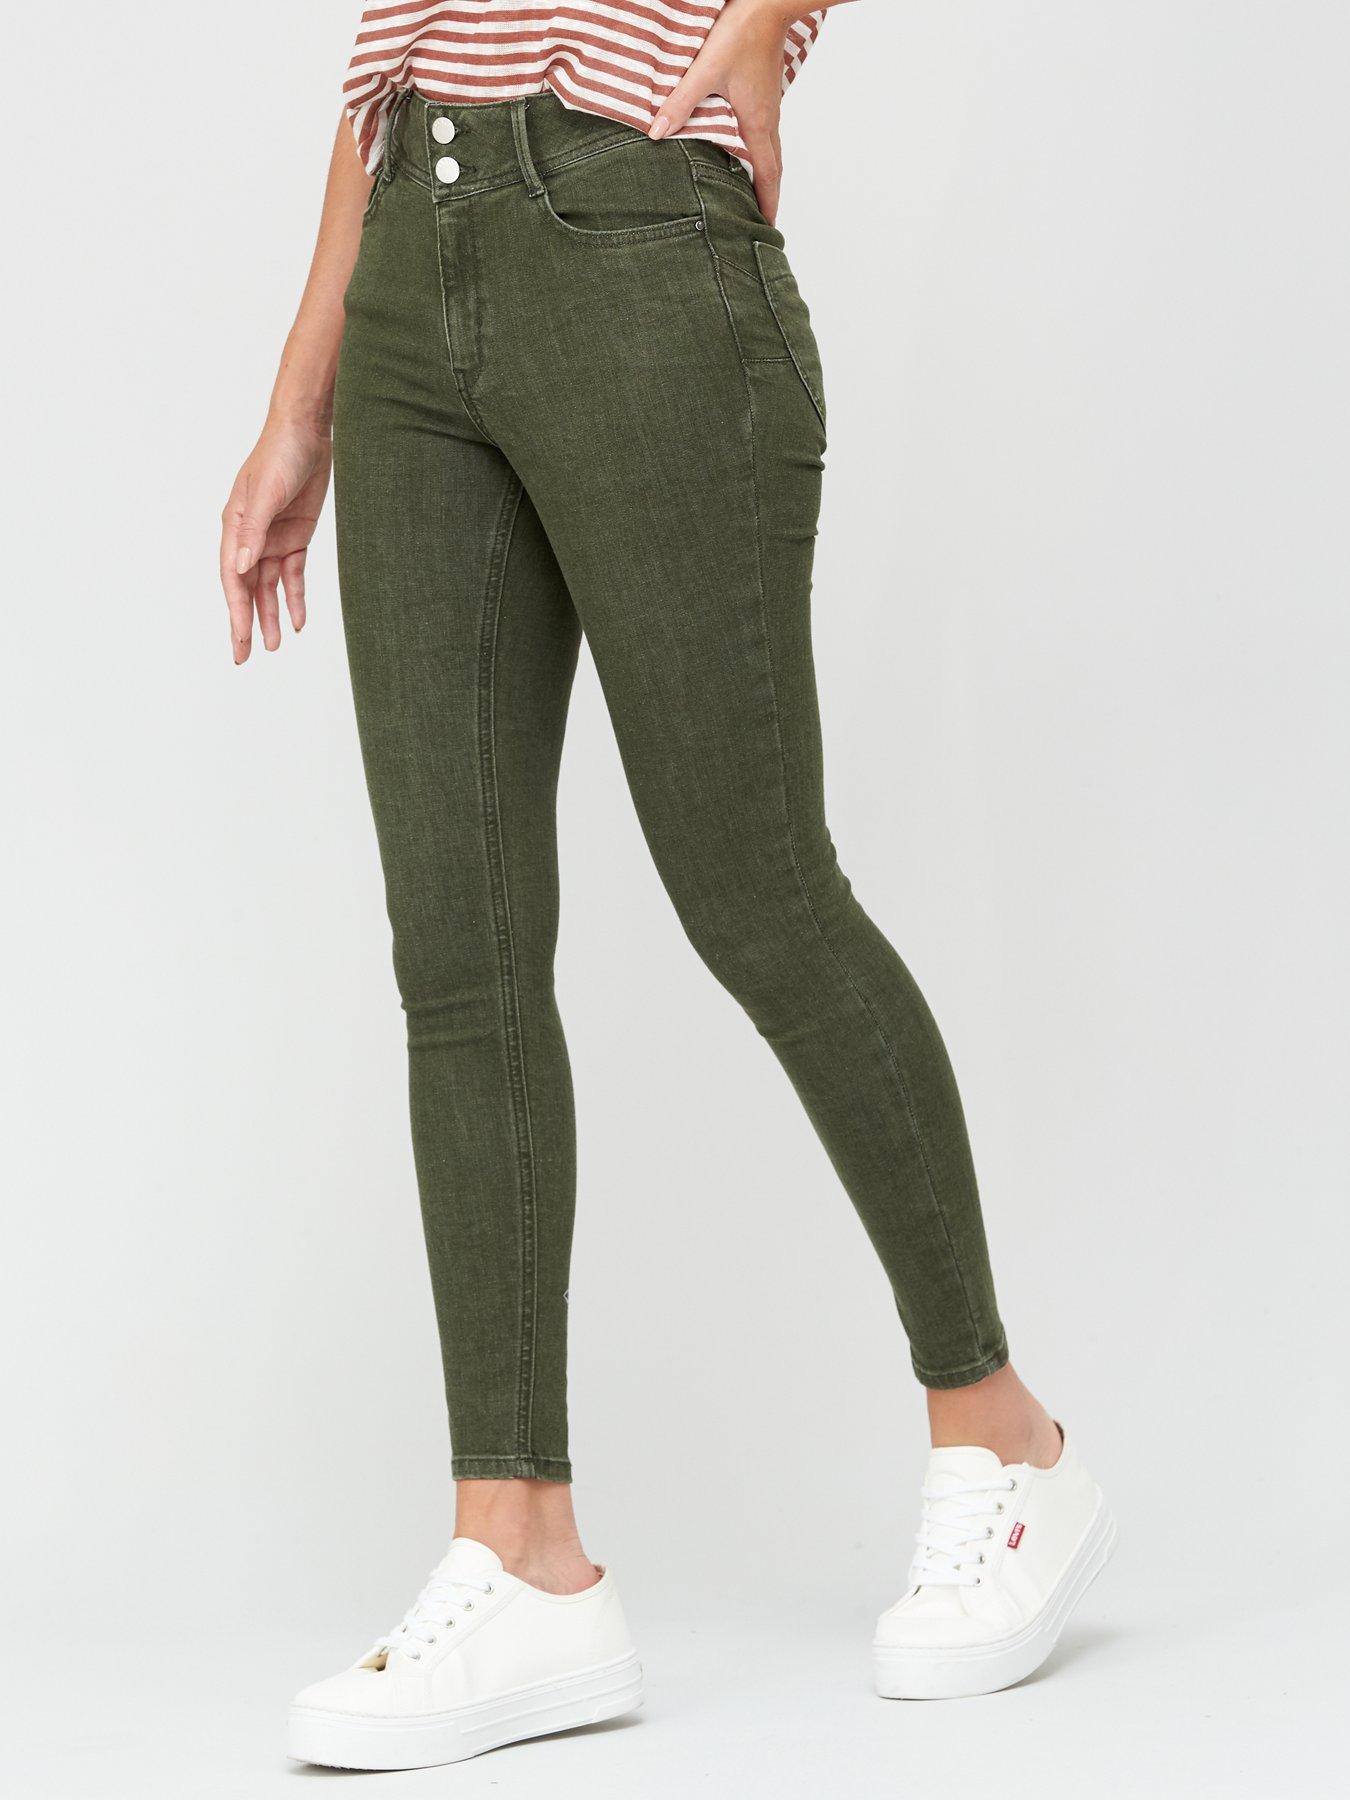 green khaki jeans womens